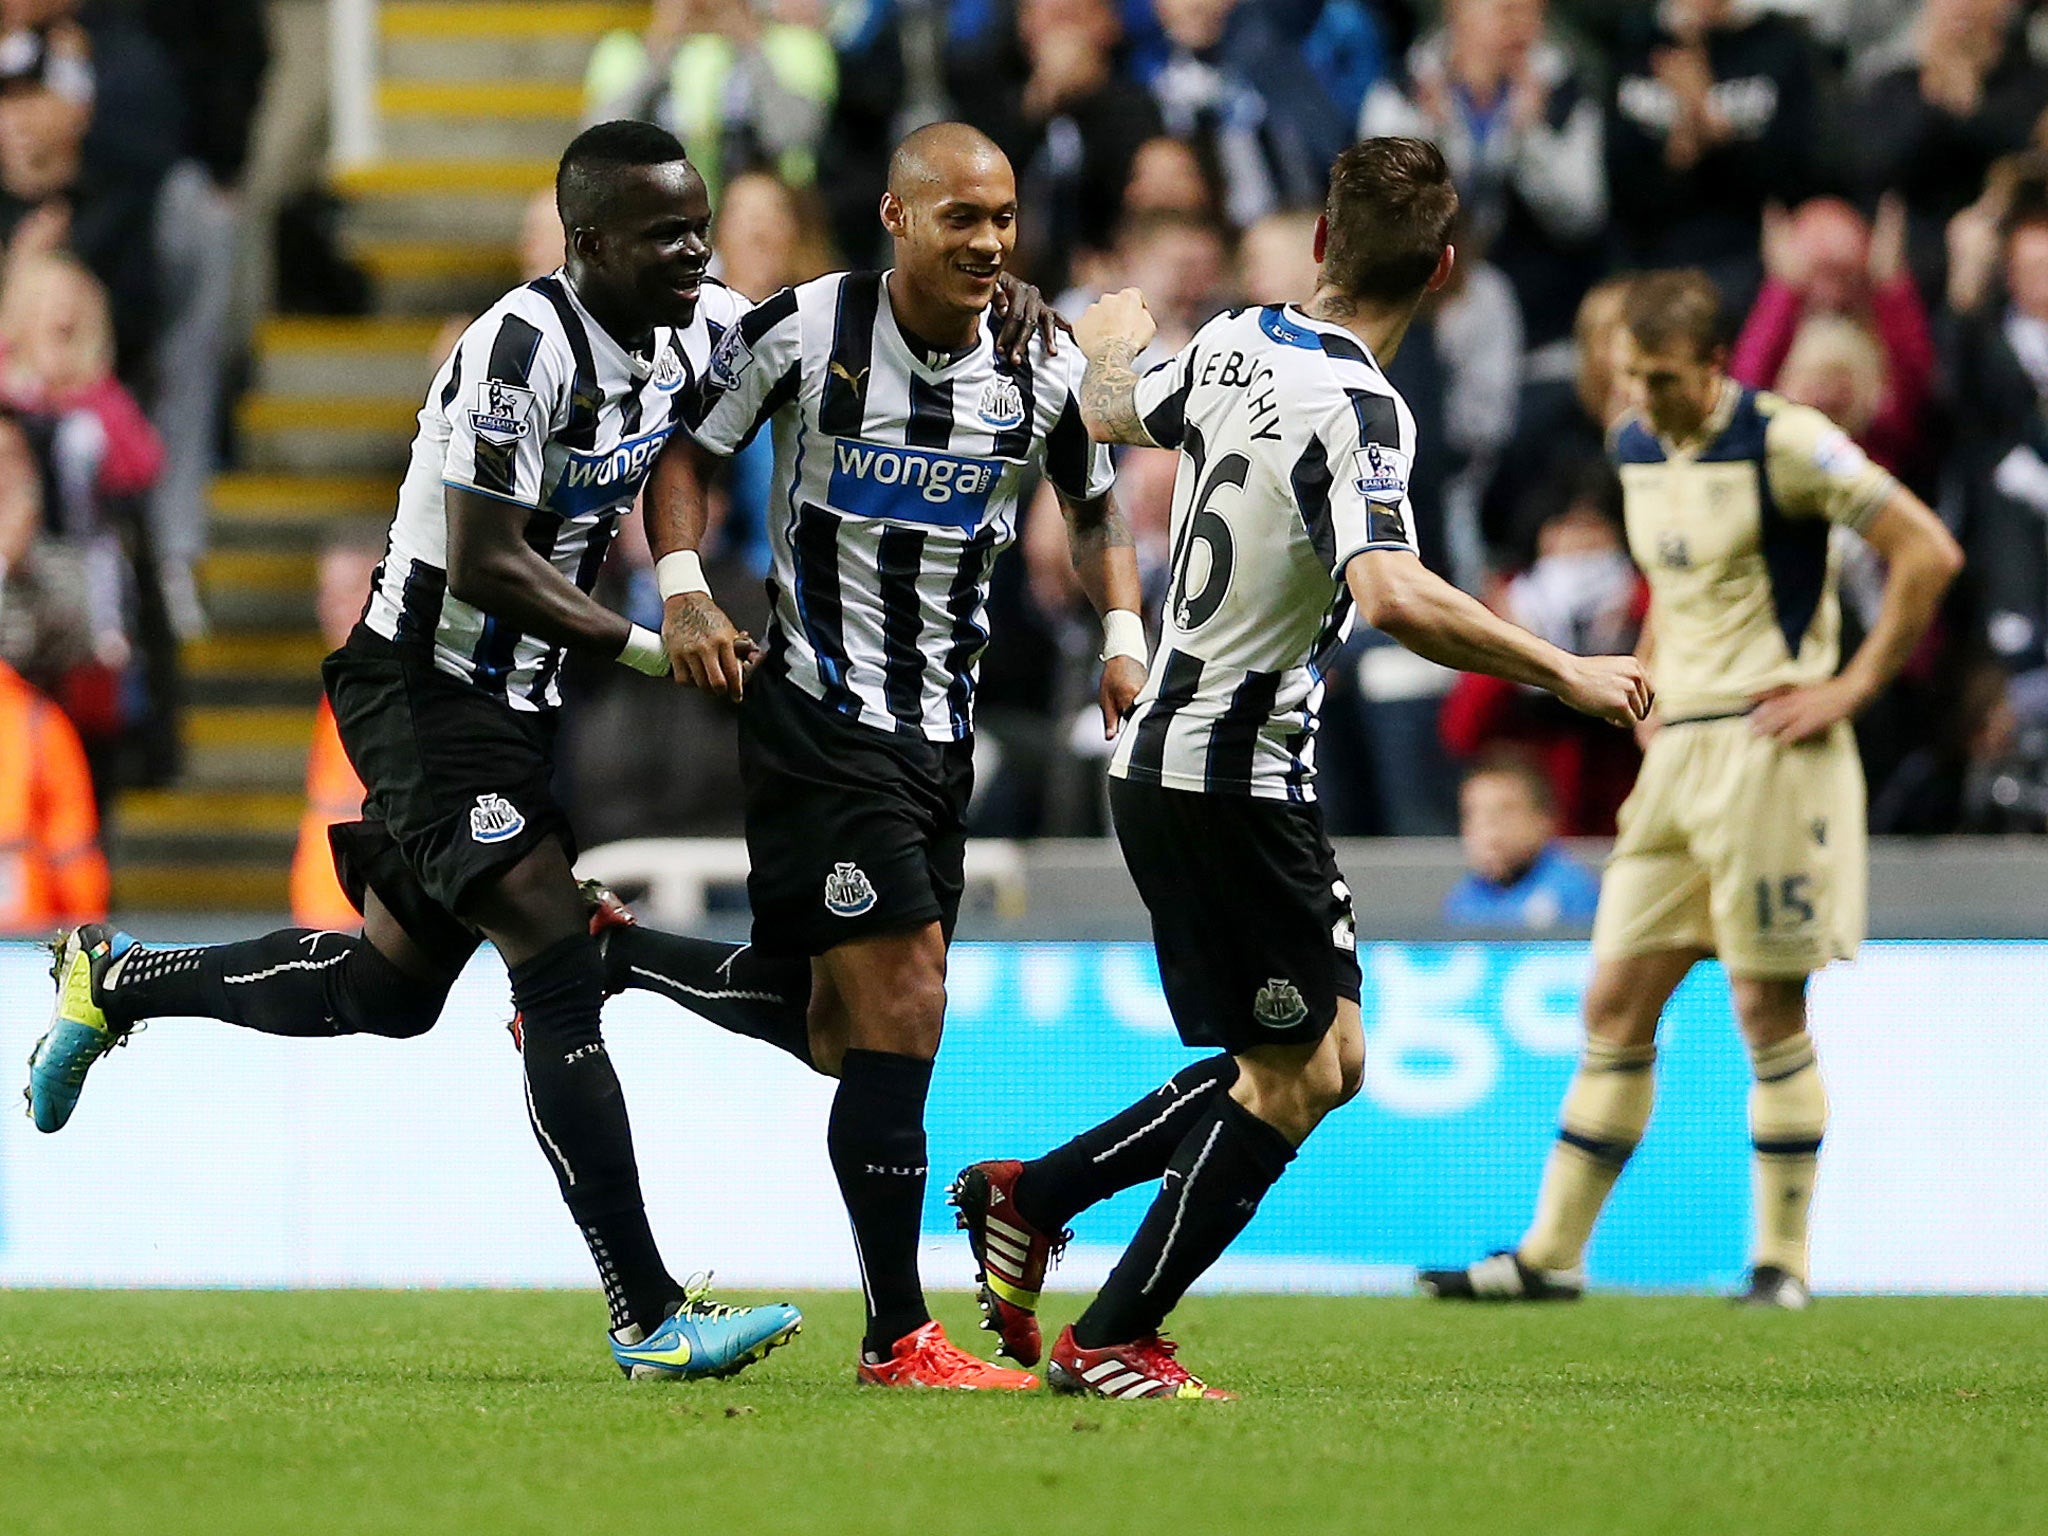 Newcastle United's French striker Yoan Gouffran (C) celebrates scoring a goal against Leeds